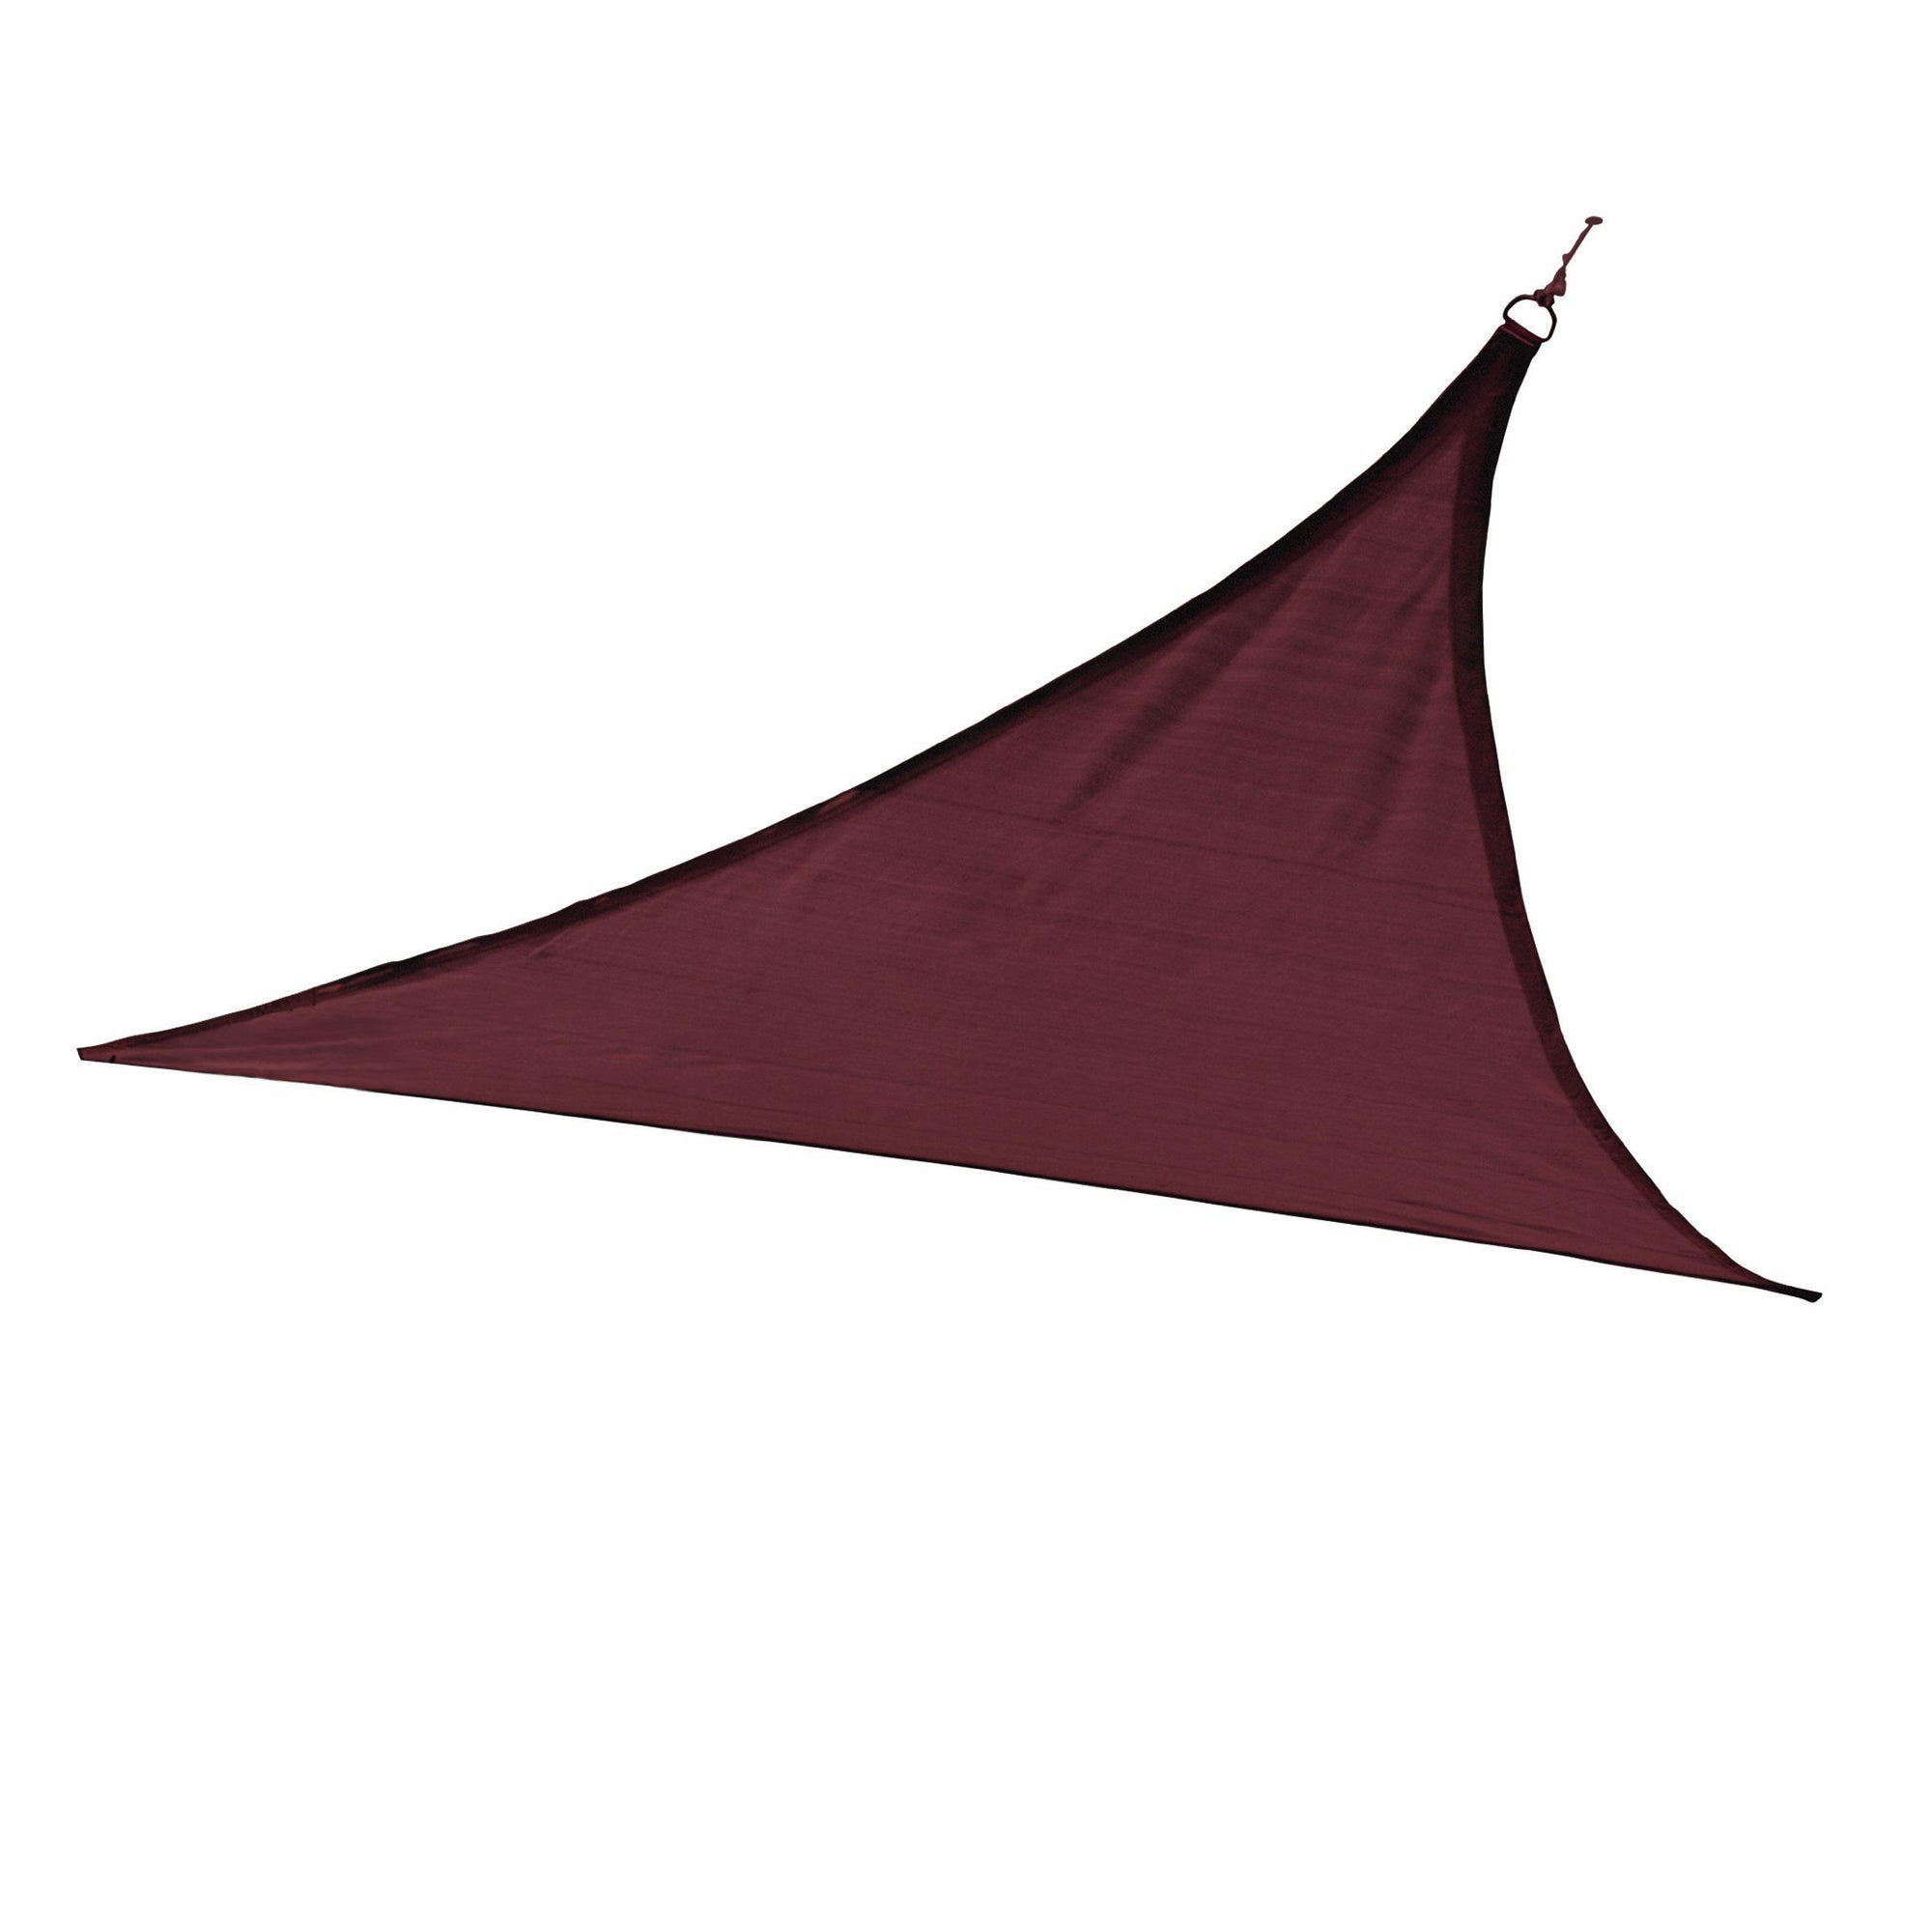 ShelterLogic Triangle Shade Sail, Terracotta, 16 x 16 x 16 ft.